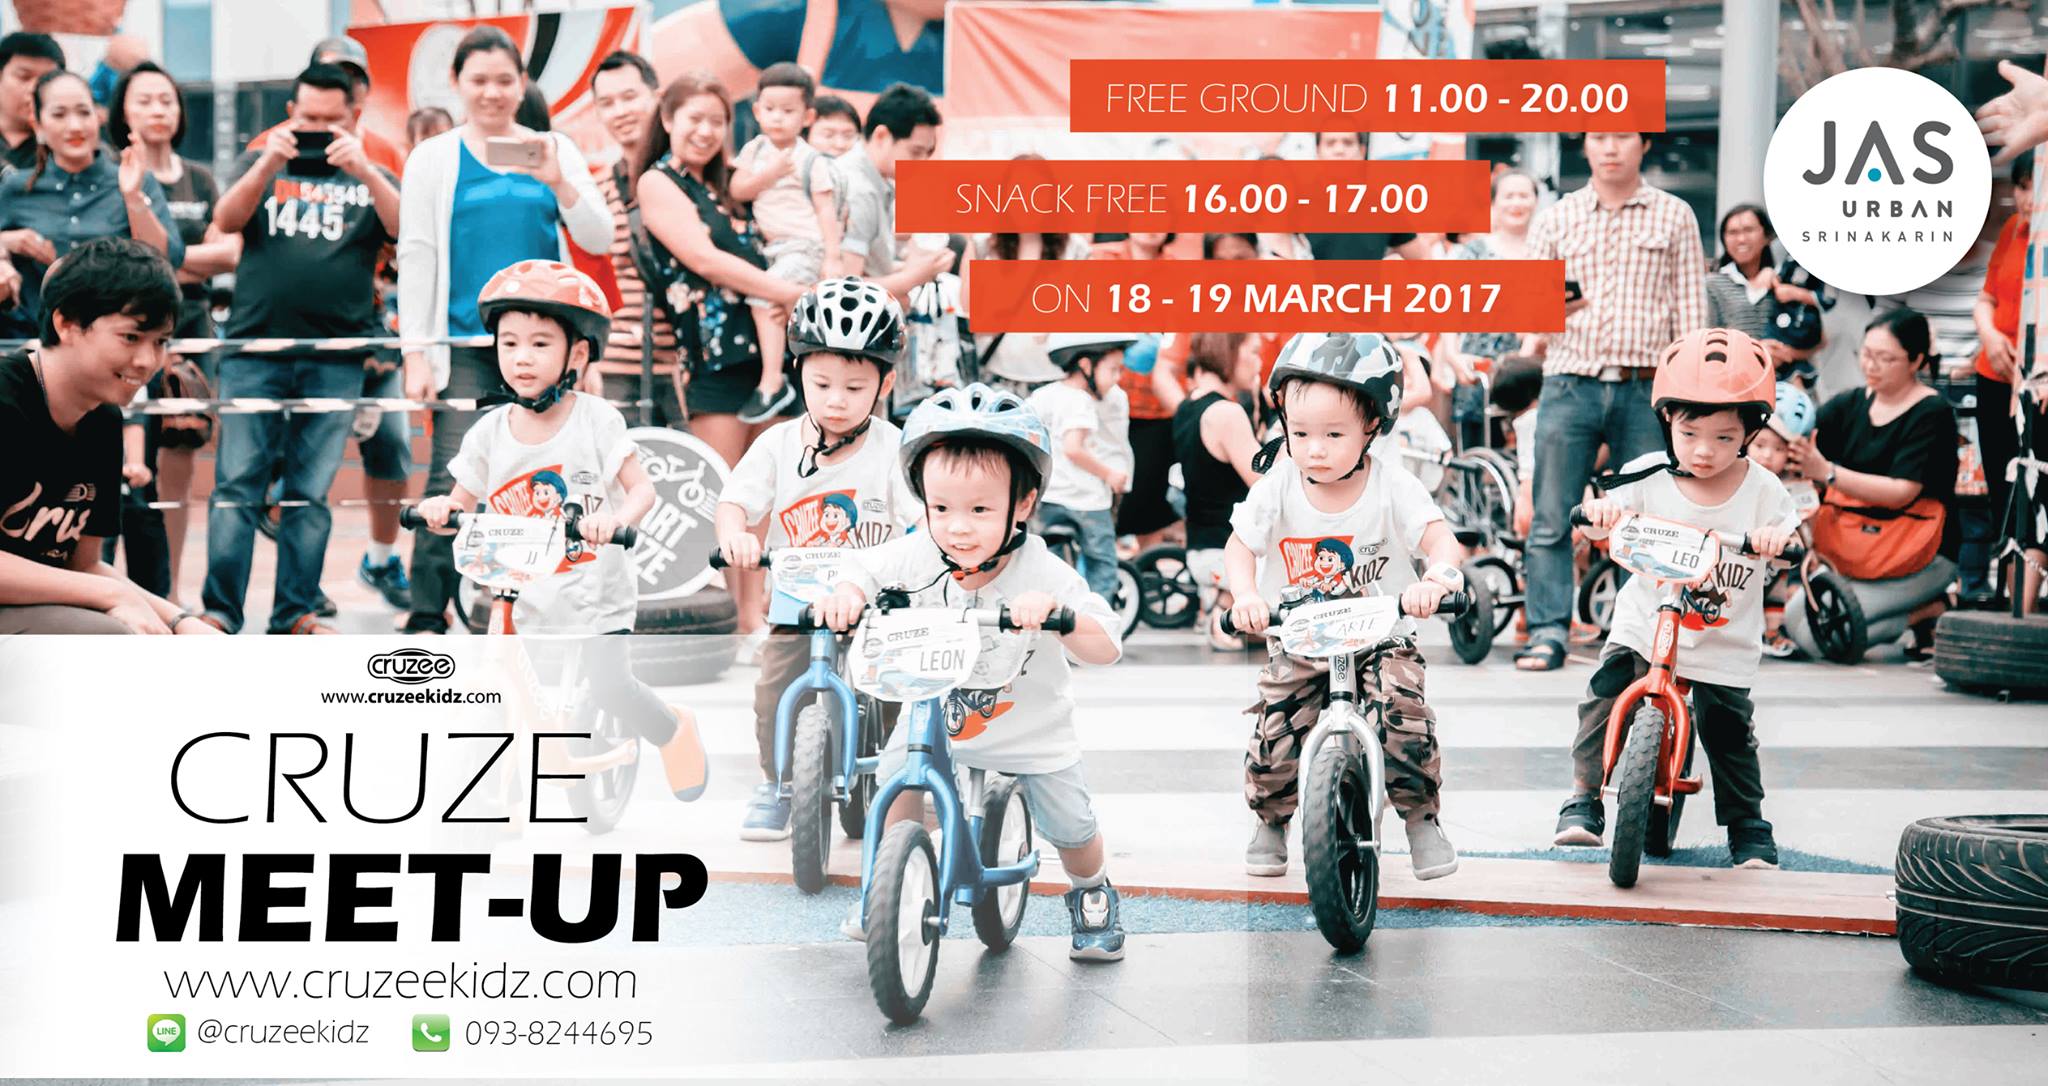 Cruze Meet-Up Free presented by Jas Urban Srinakarin